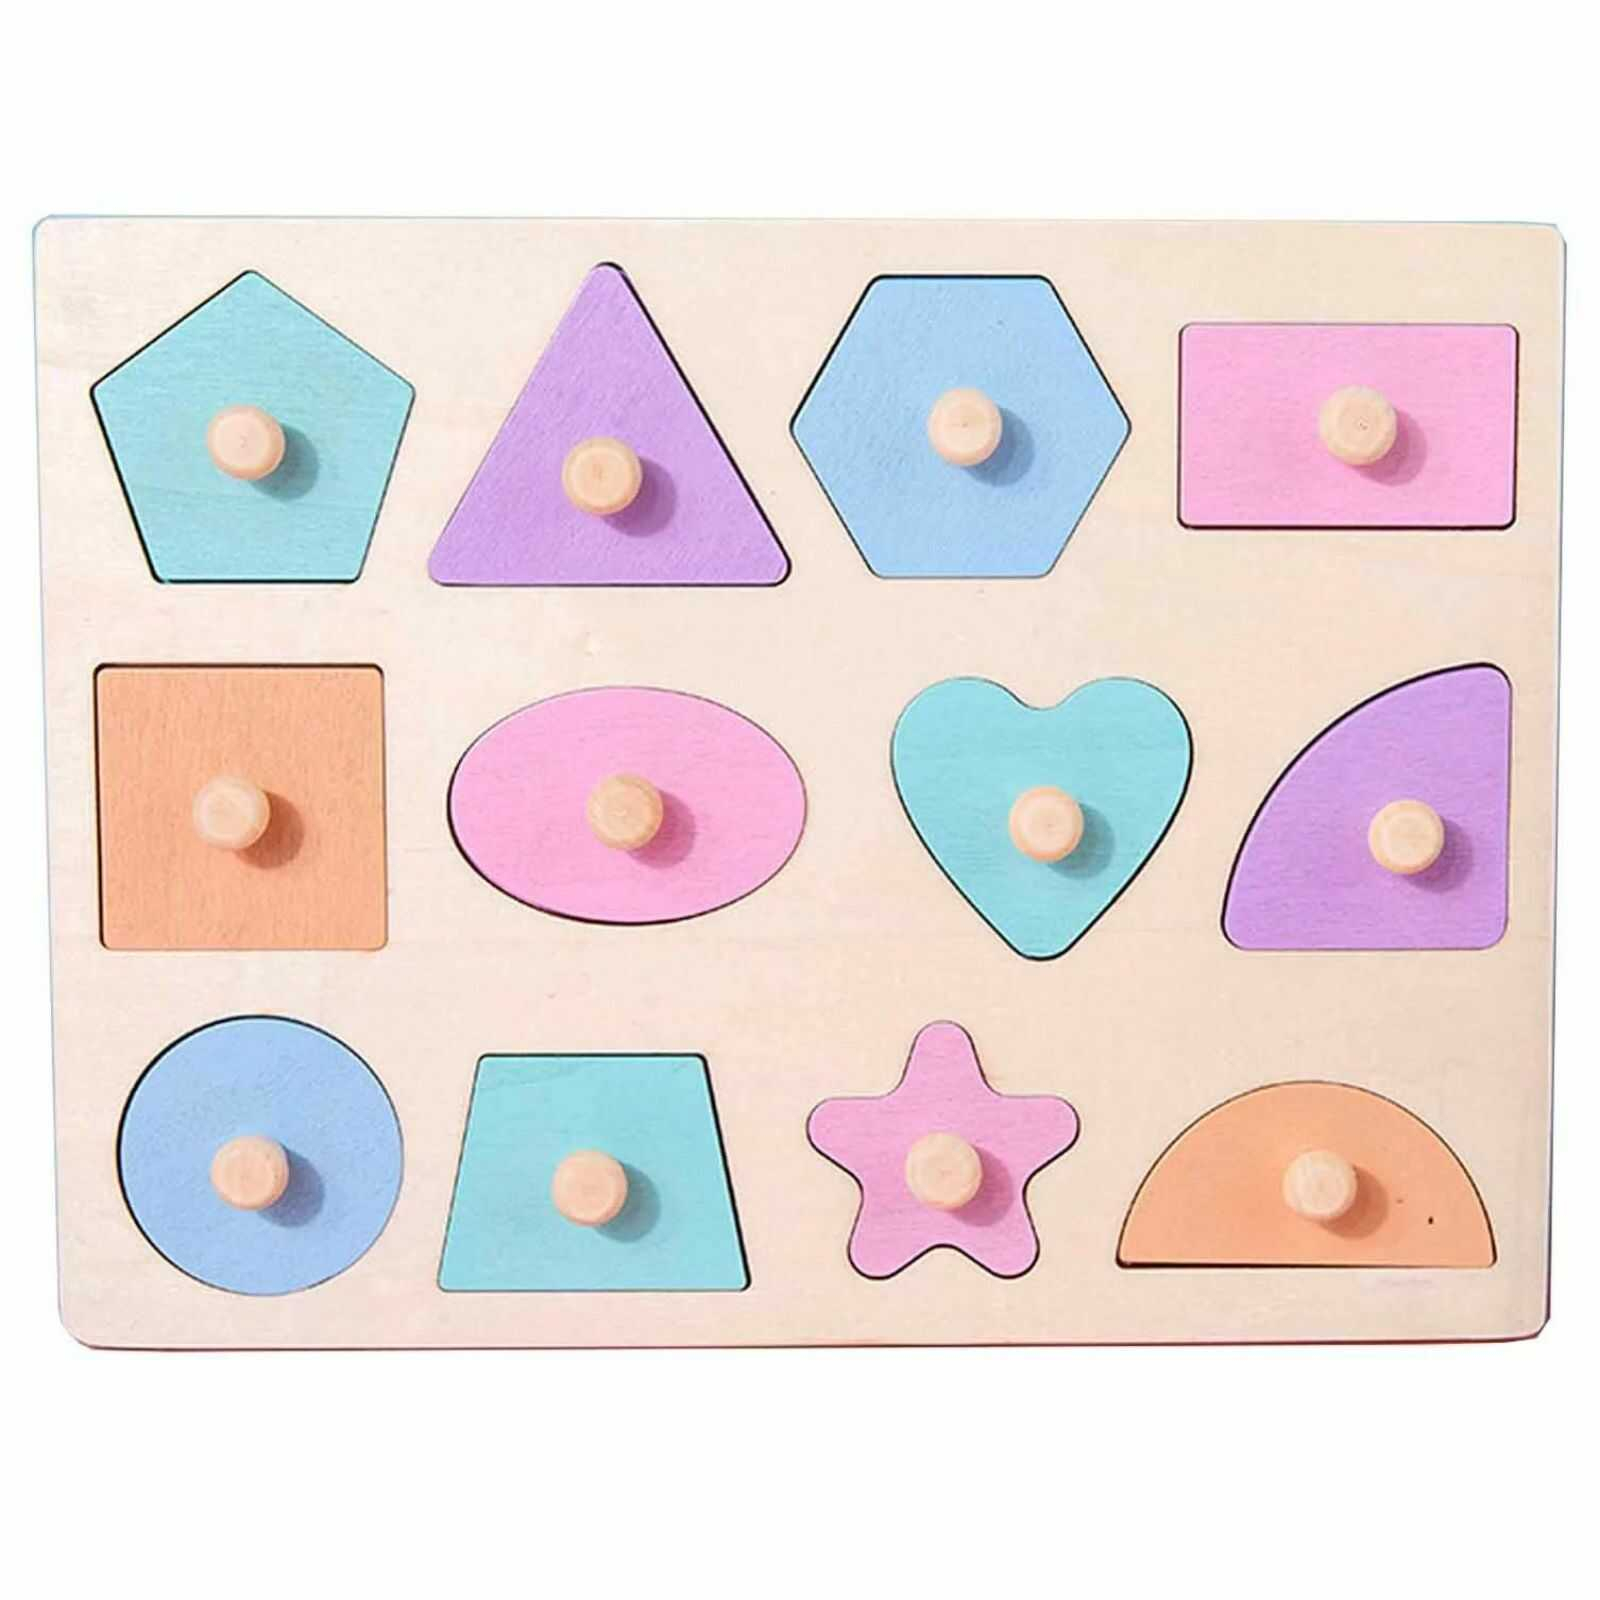 Run mortgage bandage Puzzle lemn Incastru Montessori cu maner 12 forme geometrice pastel